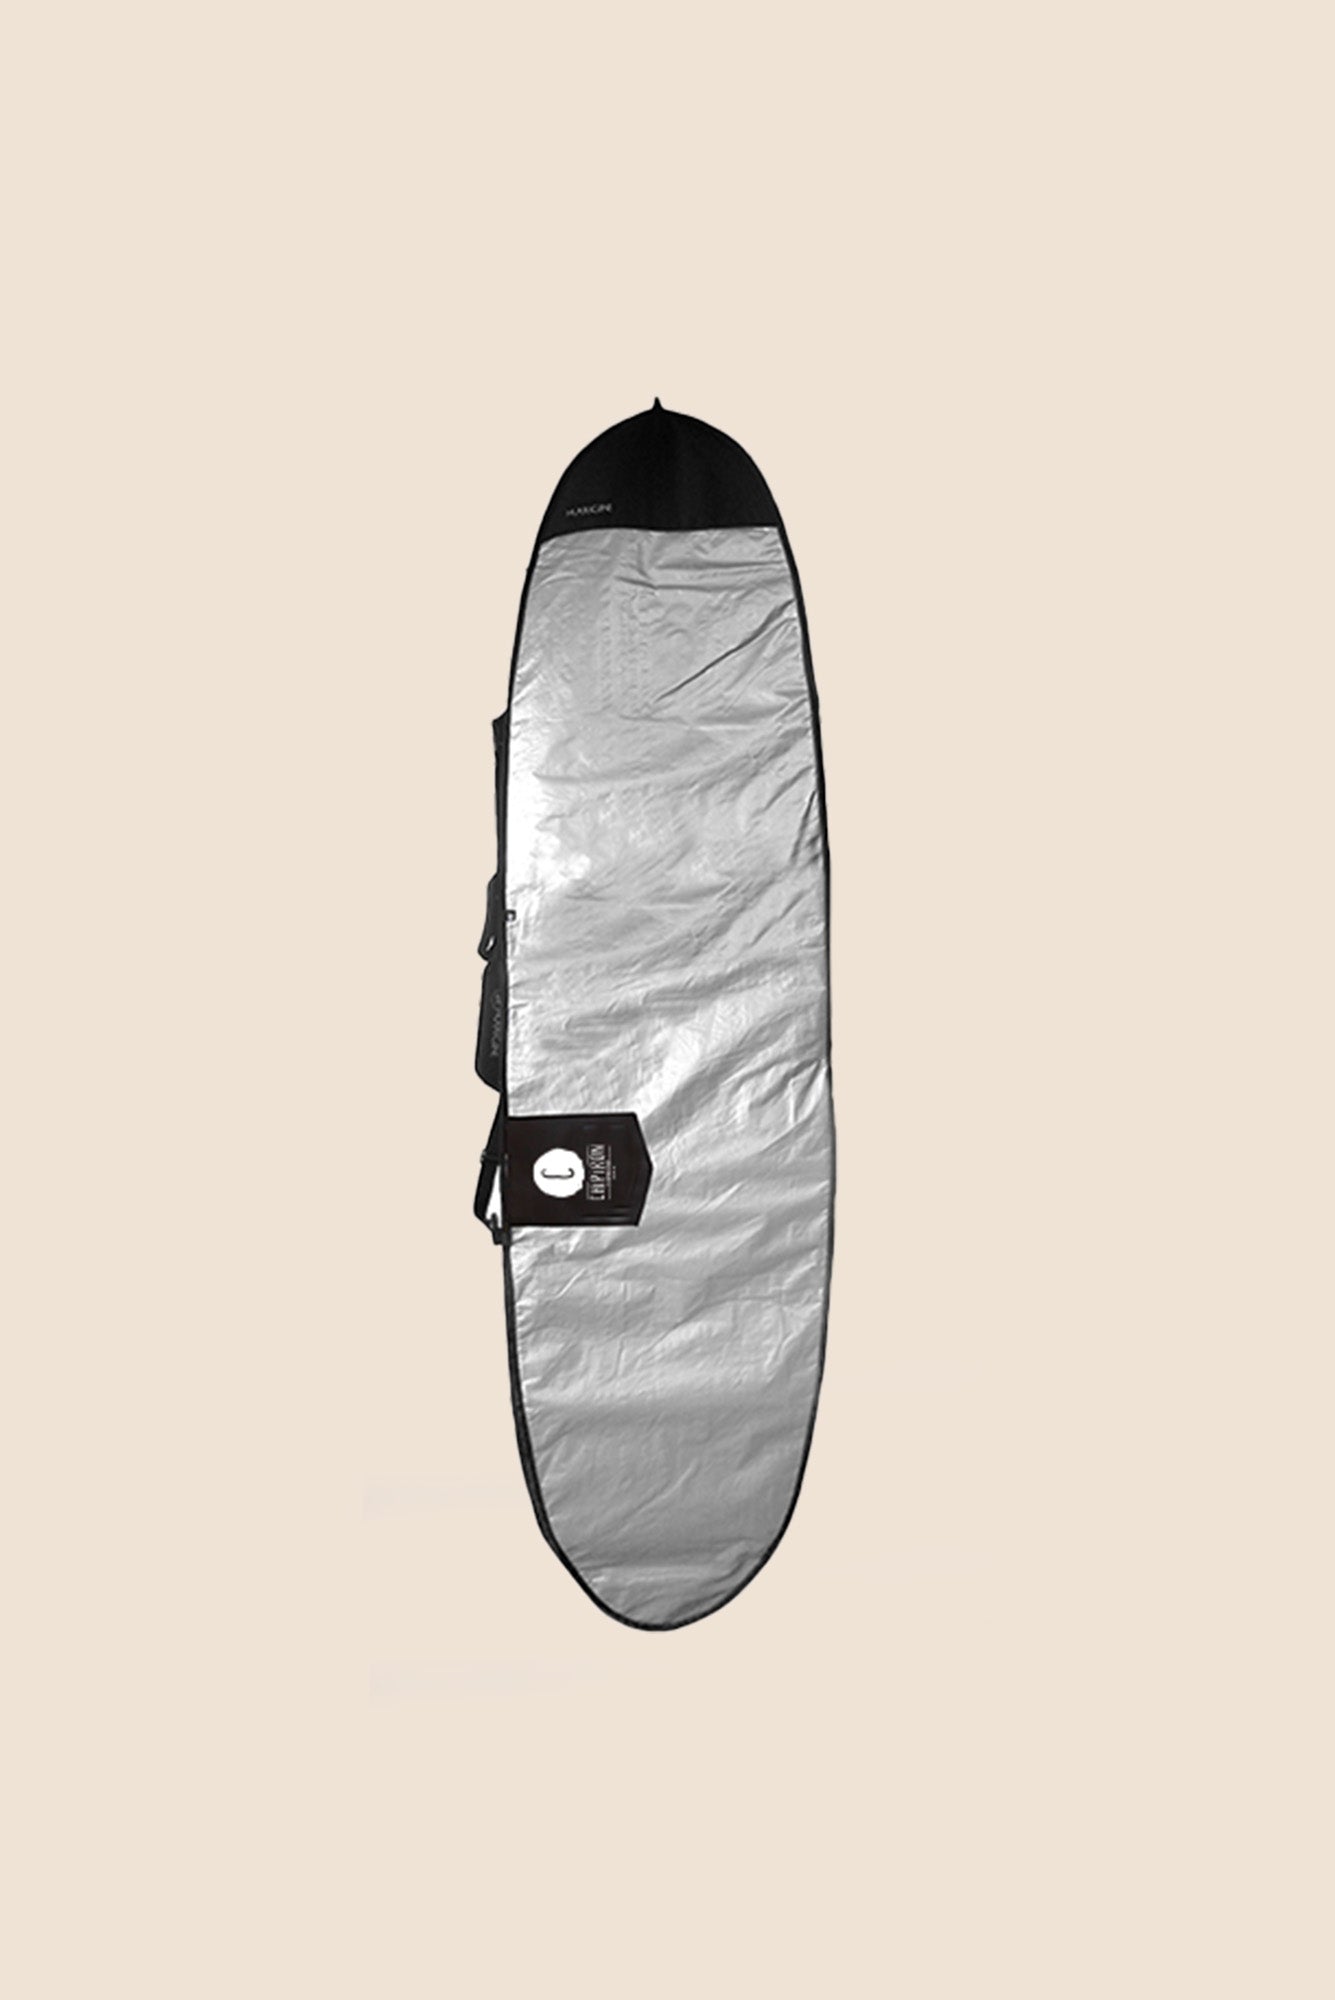 Minimal boardbag 1 board 